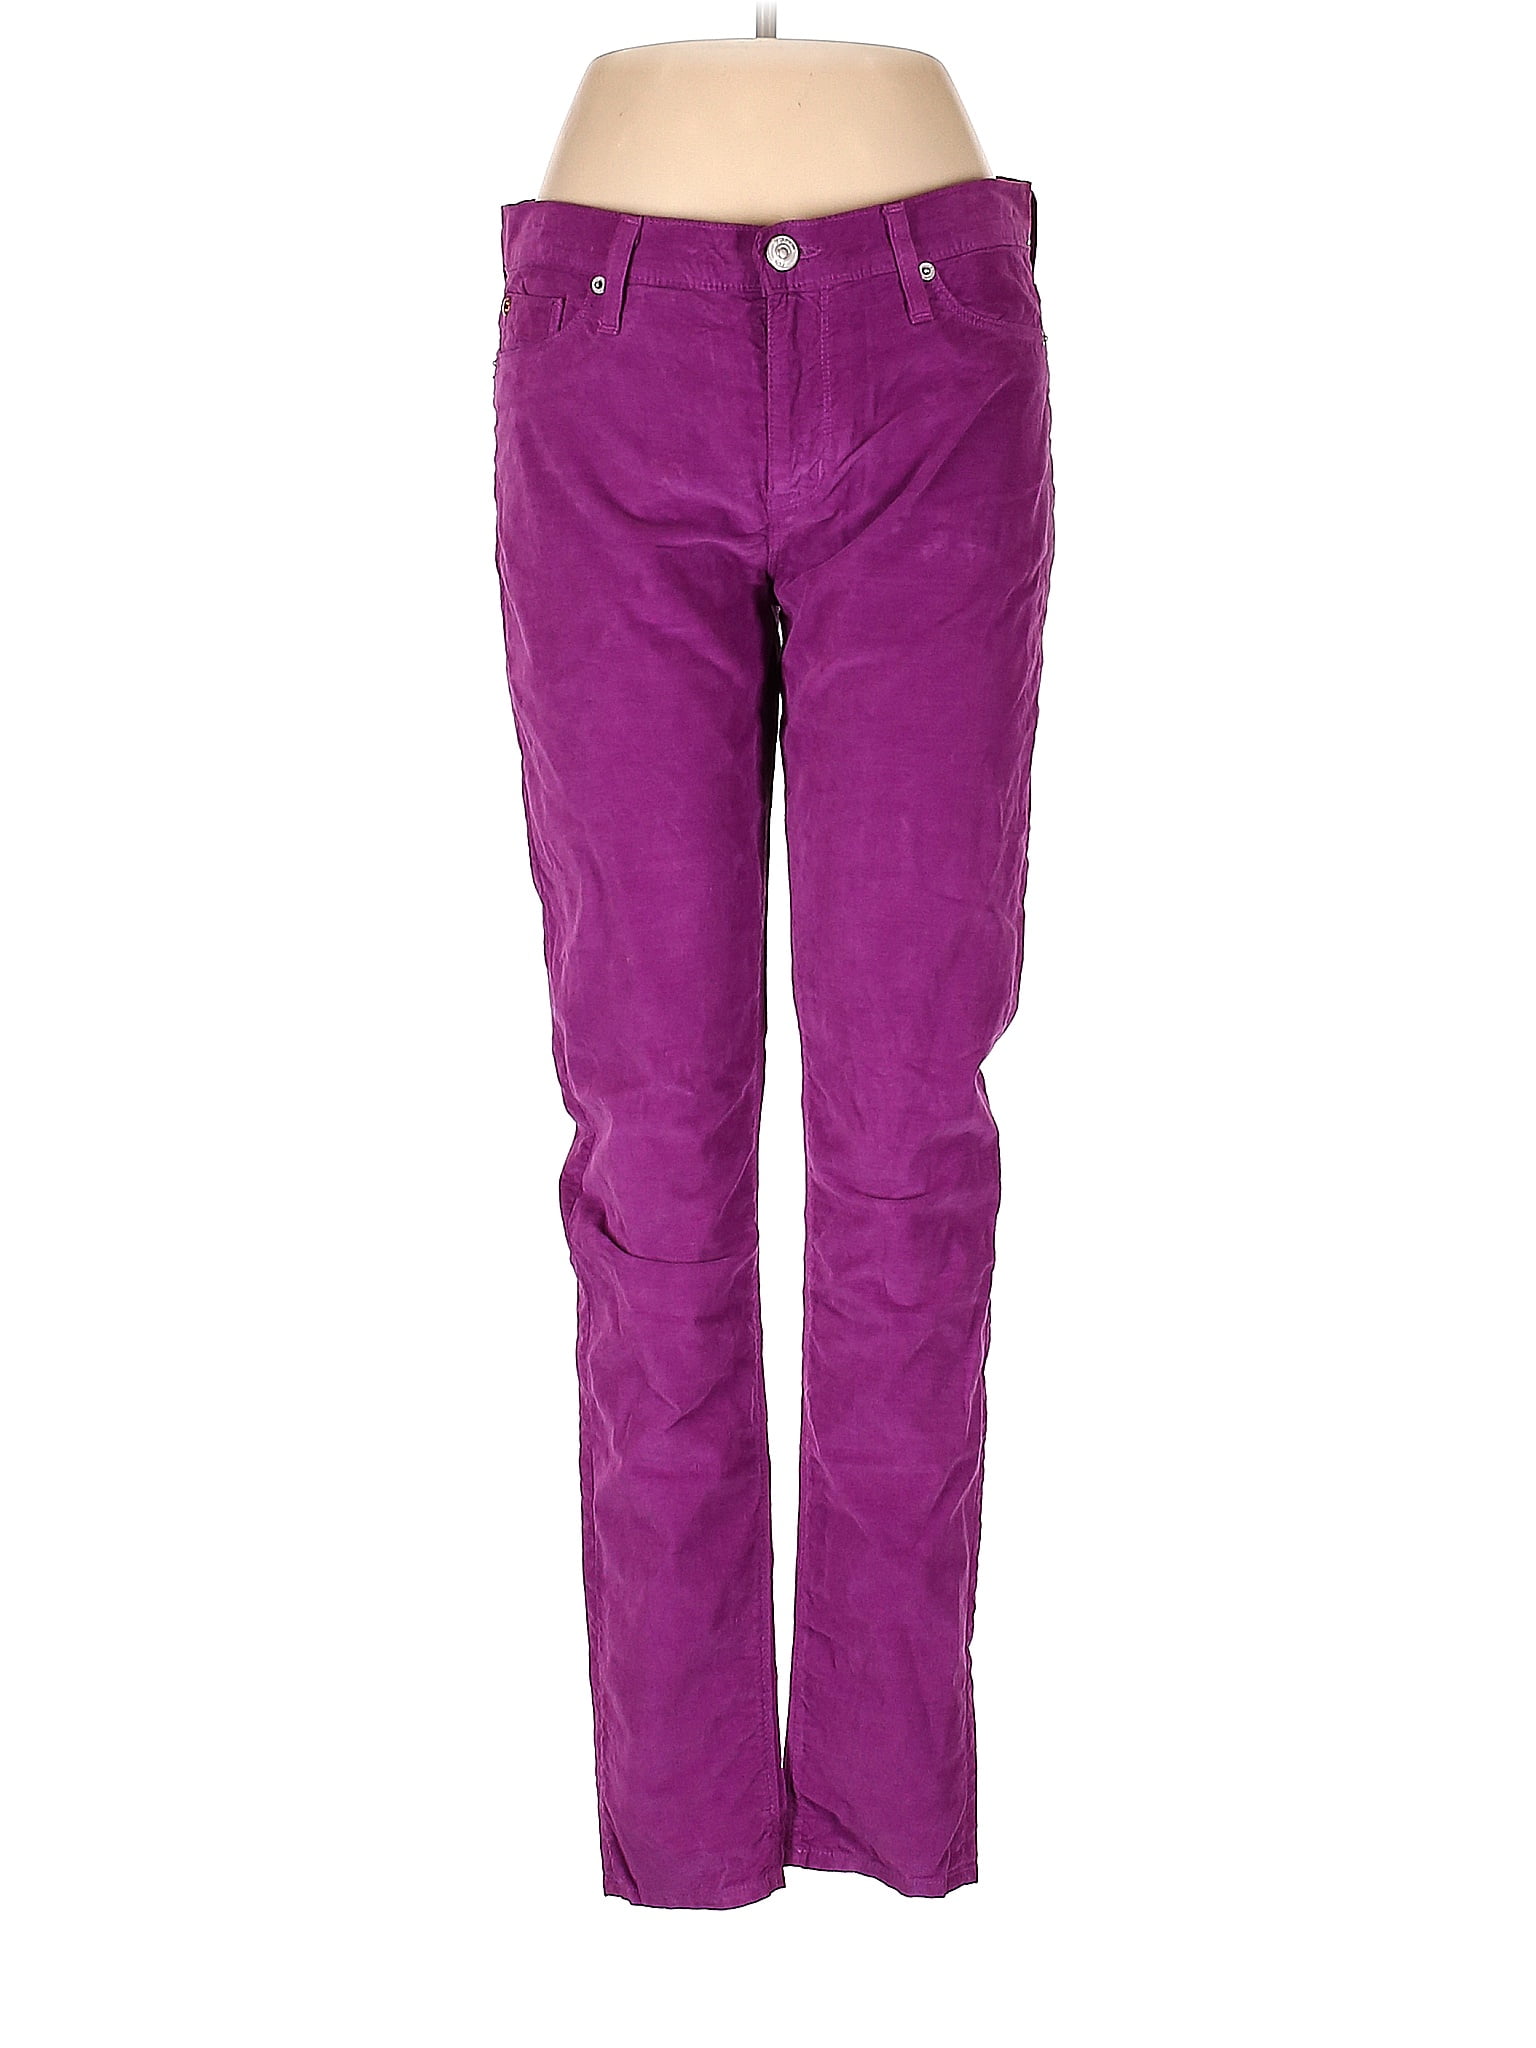 Hudson Jeans Purple Cords 29 Waist - 78% off | thredUP